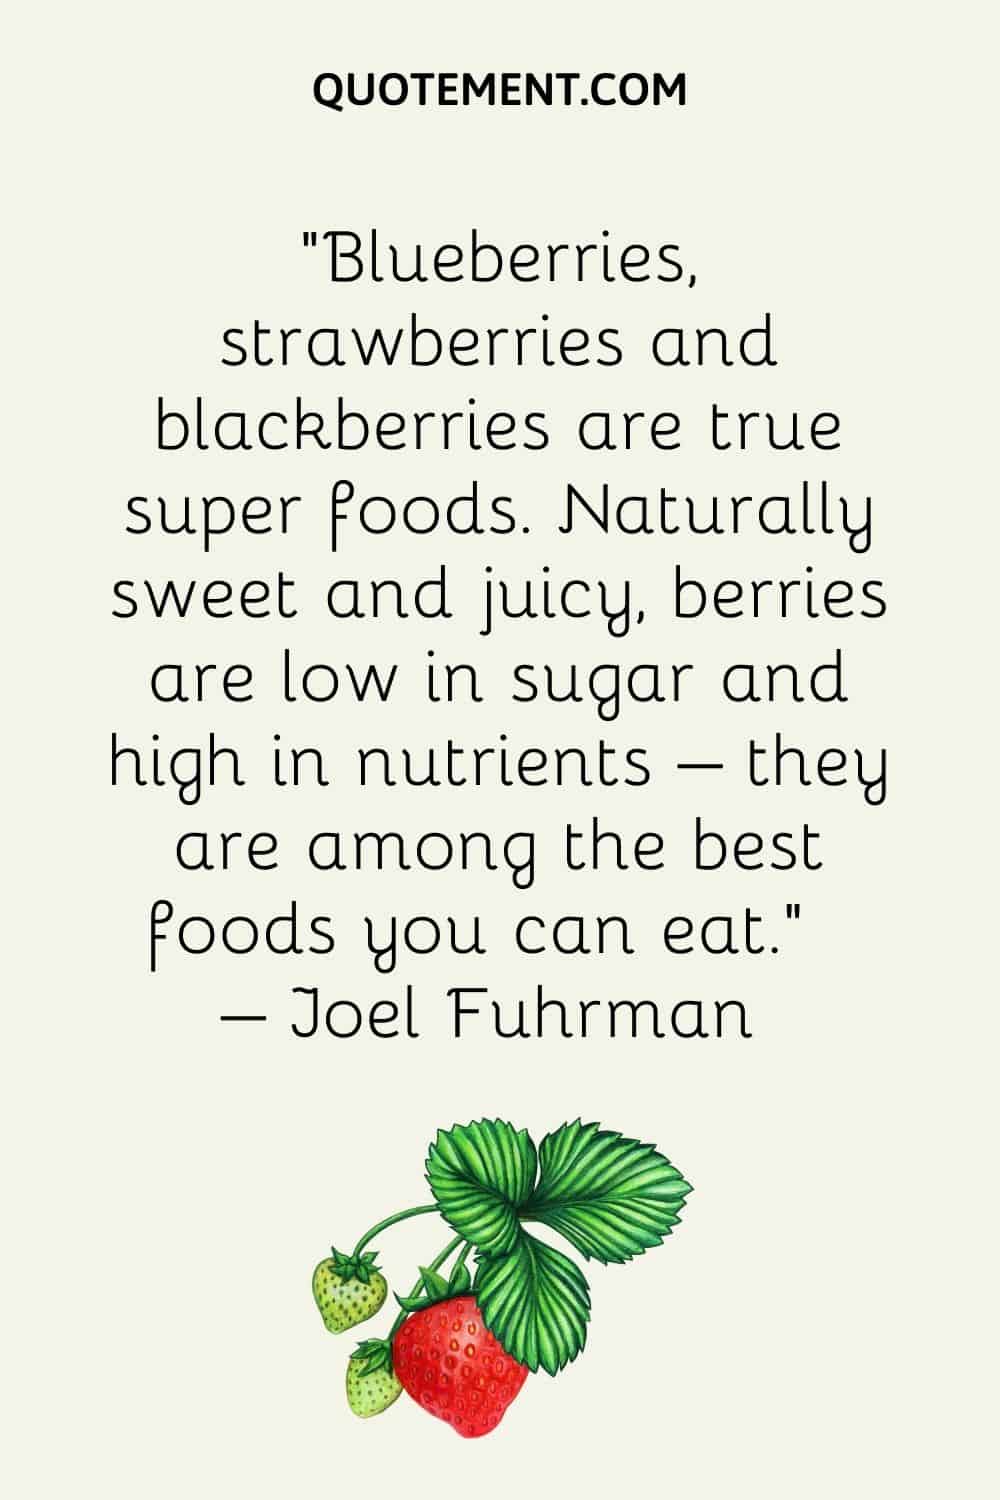 Blueberries, strawberries and blackberries are true super foods.